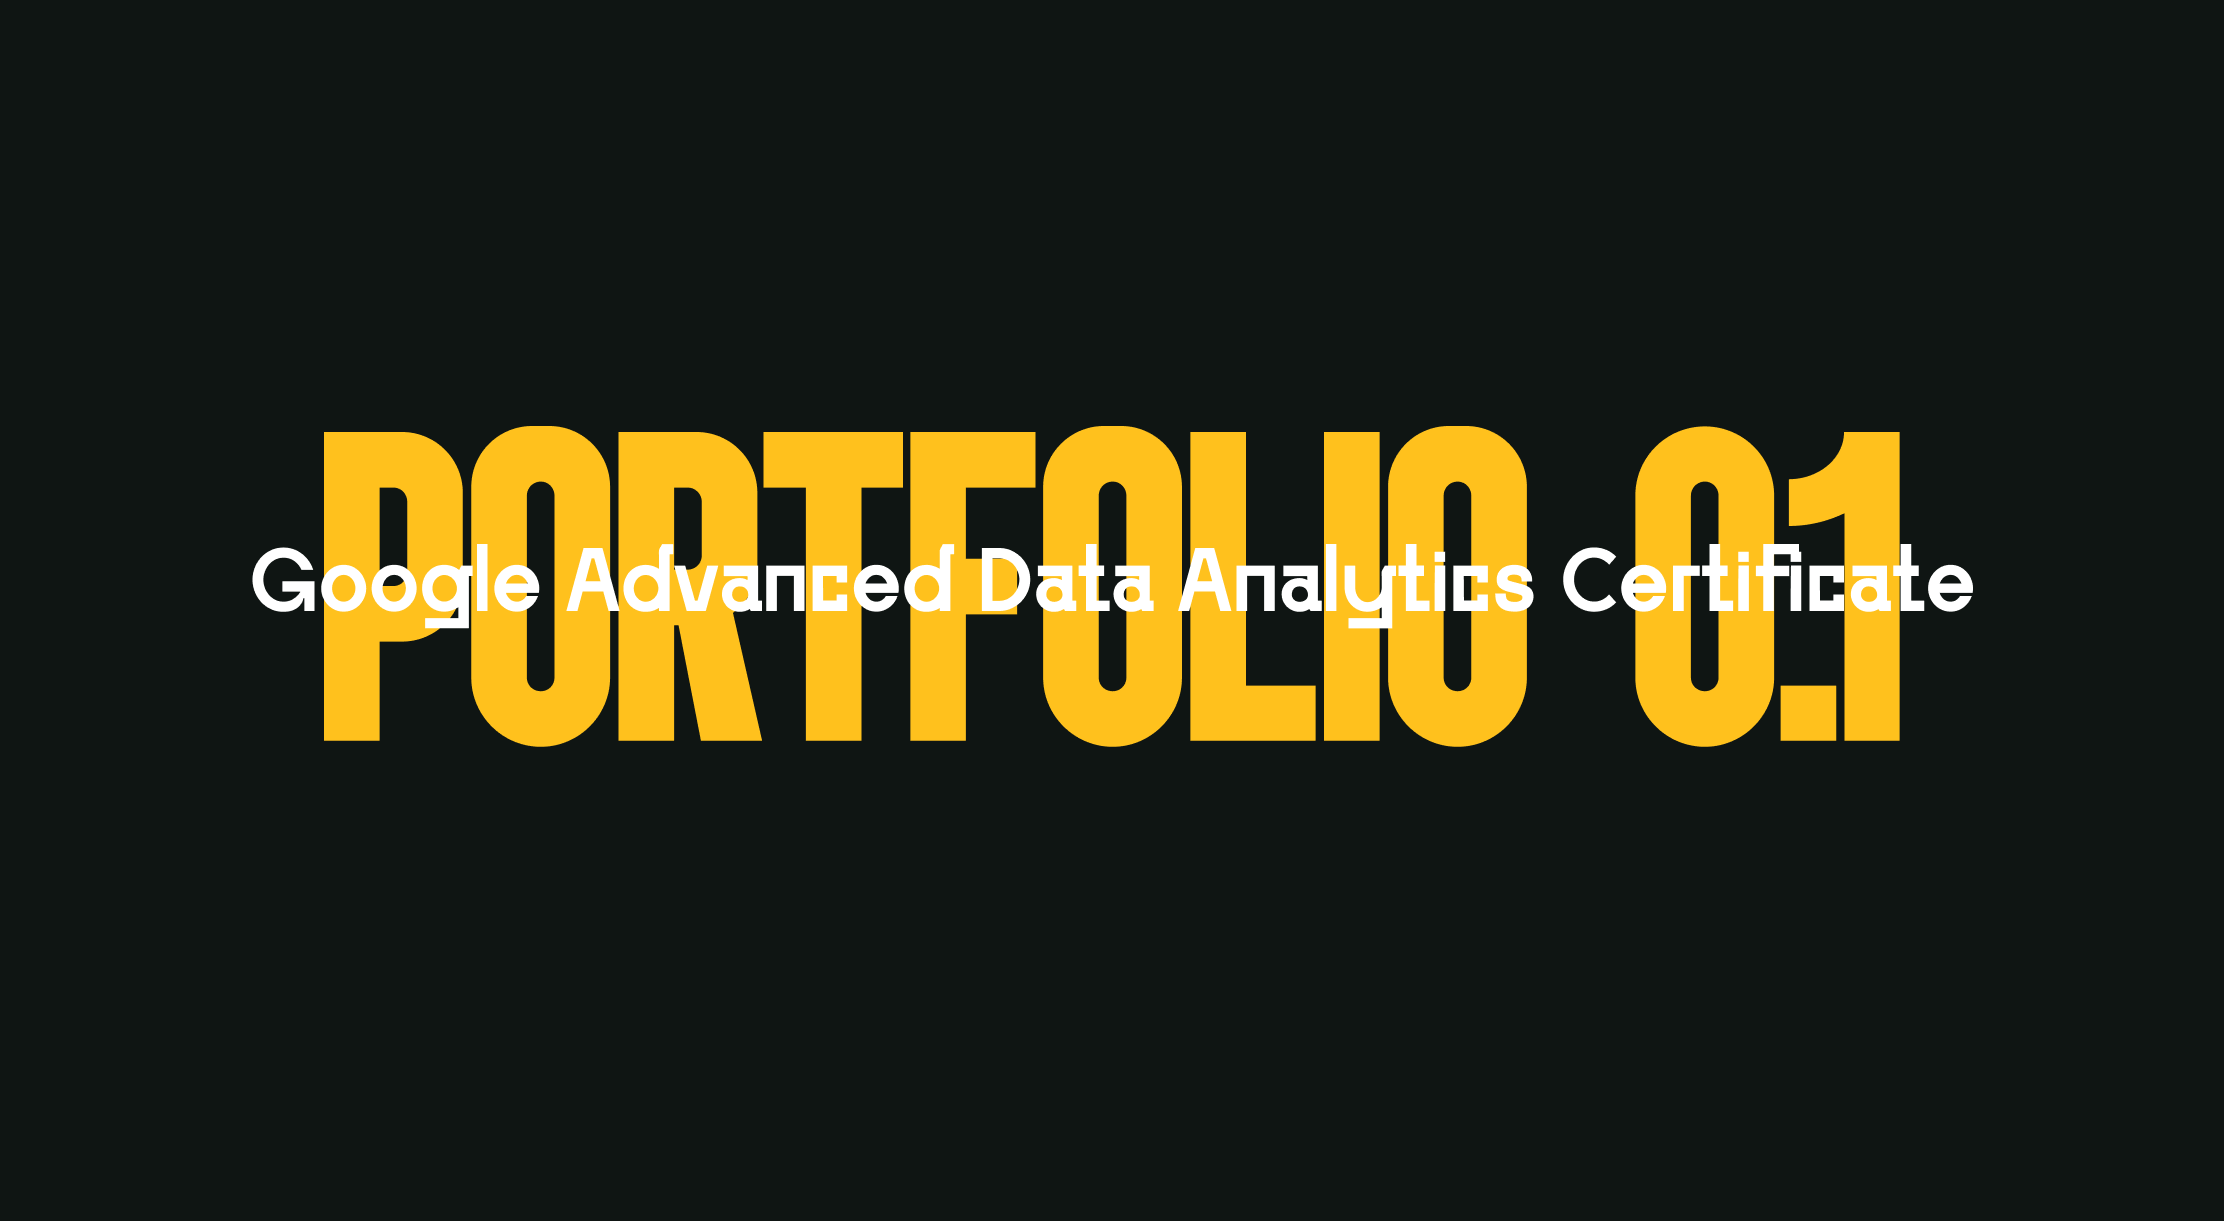 Portfolio module 1 {Foundations of Data Science} Google Advanced Data Analytics Certificate